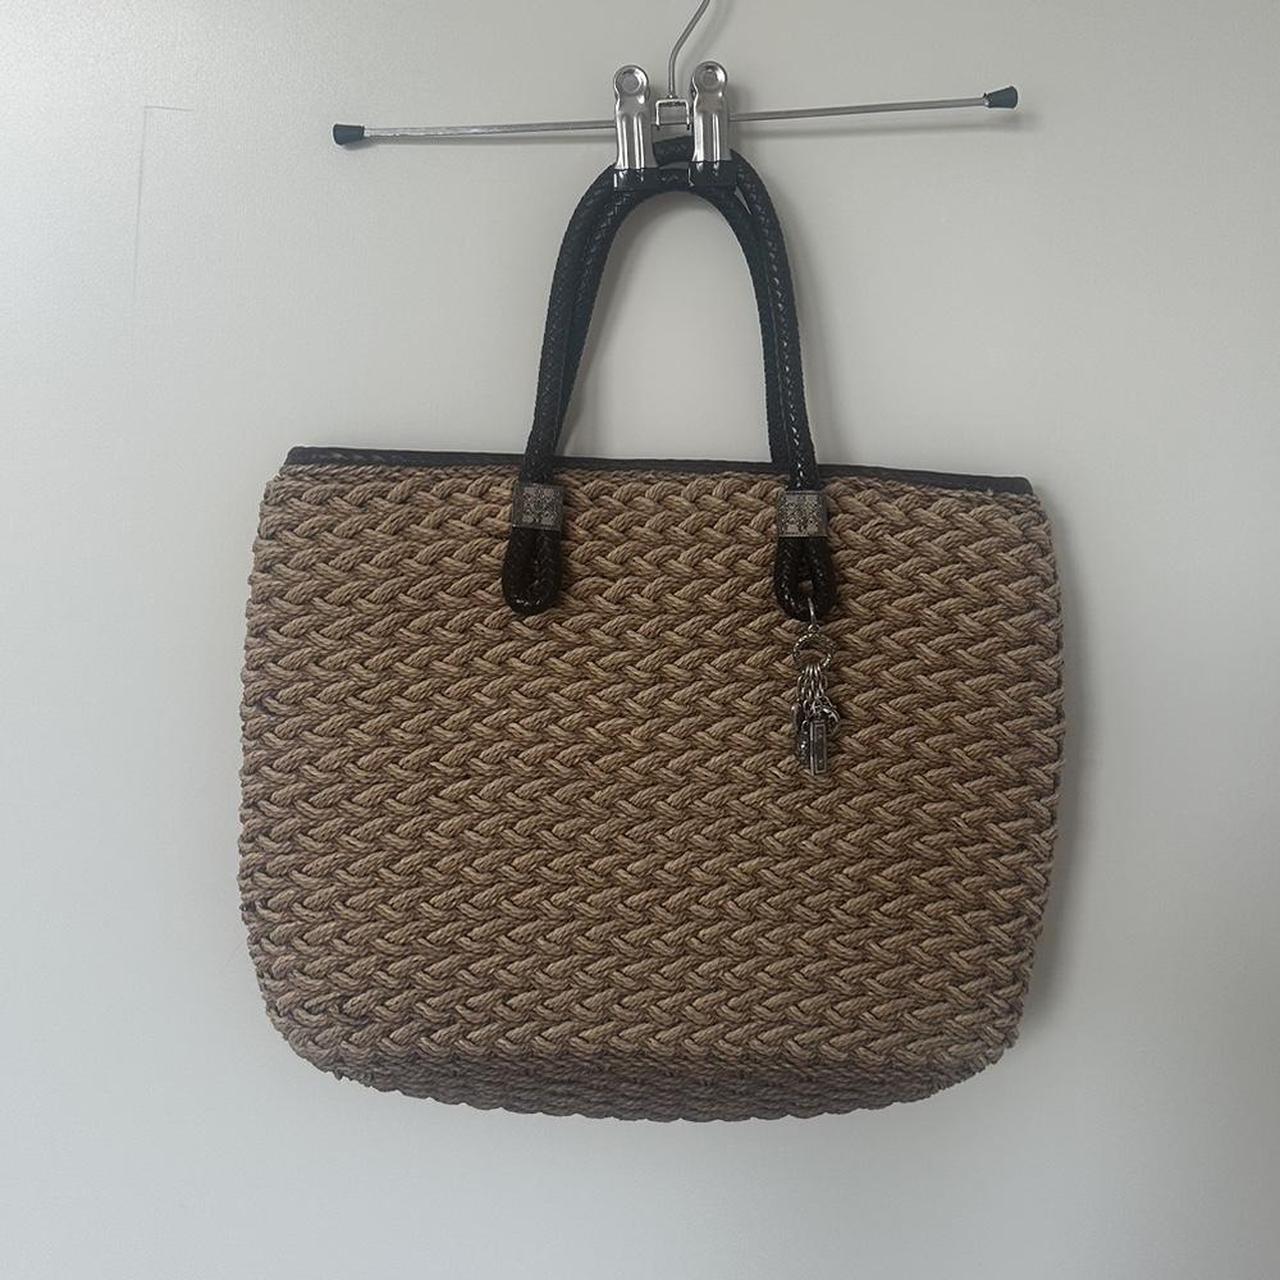 Brighton Cody Woven Straw Leather Detail Shoulder Bag Purse (9x13x4